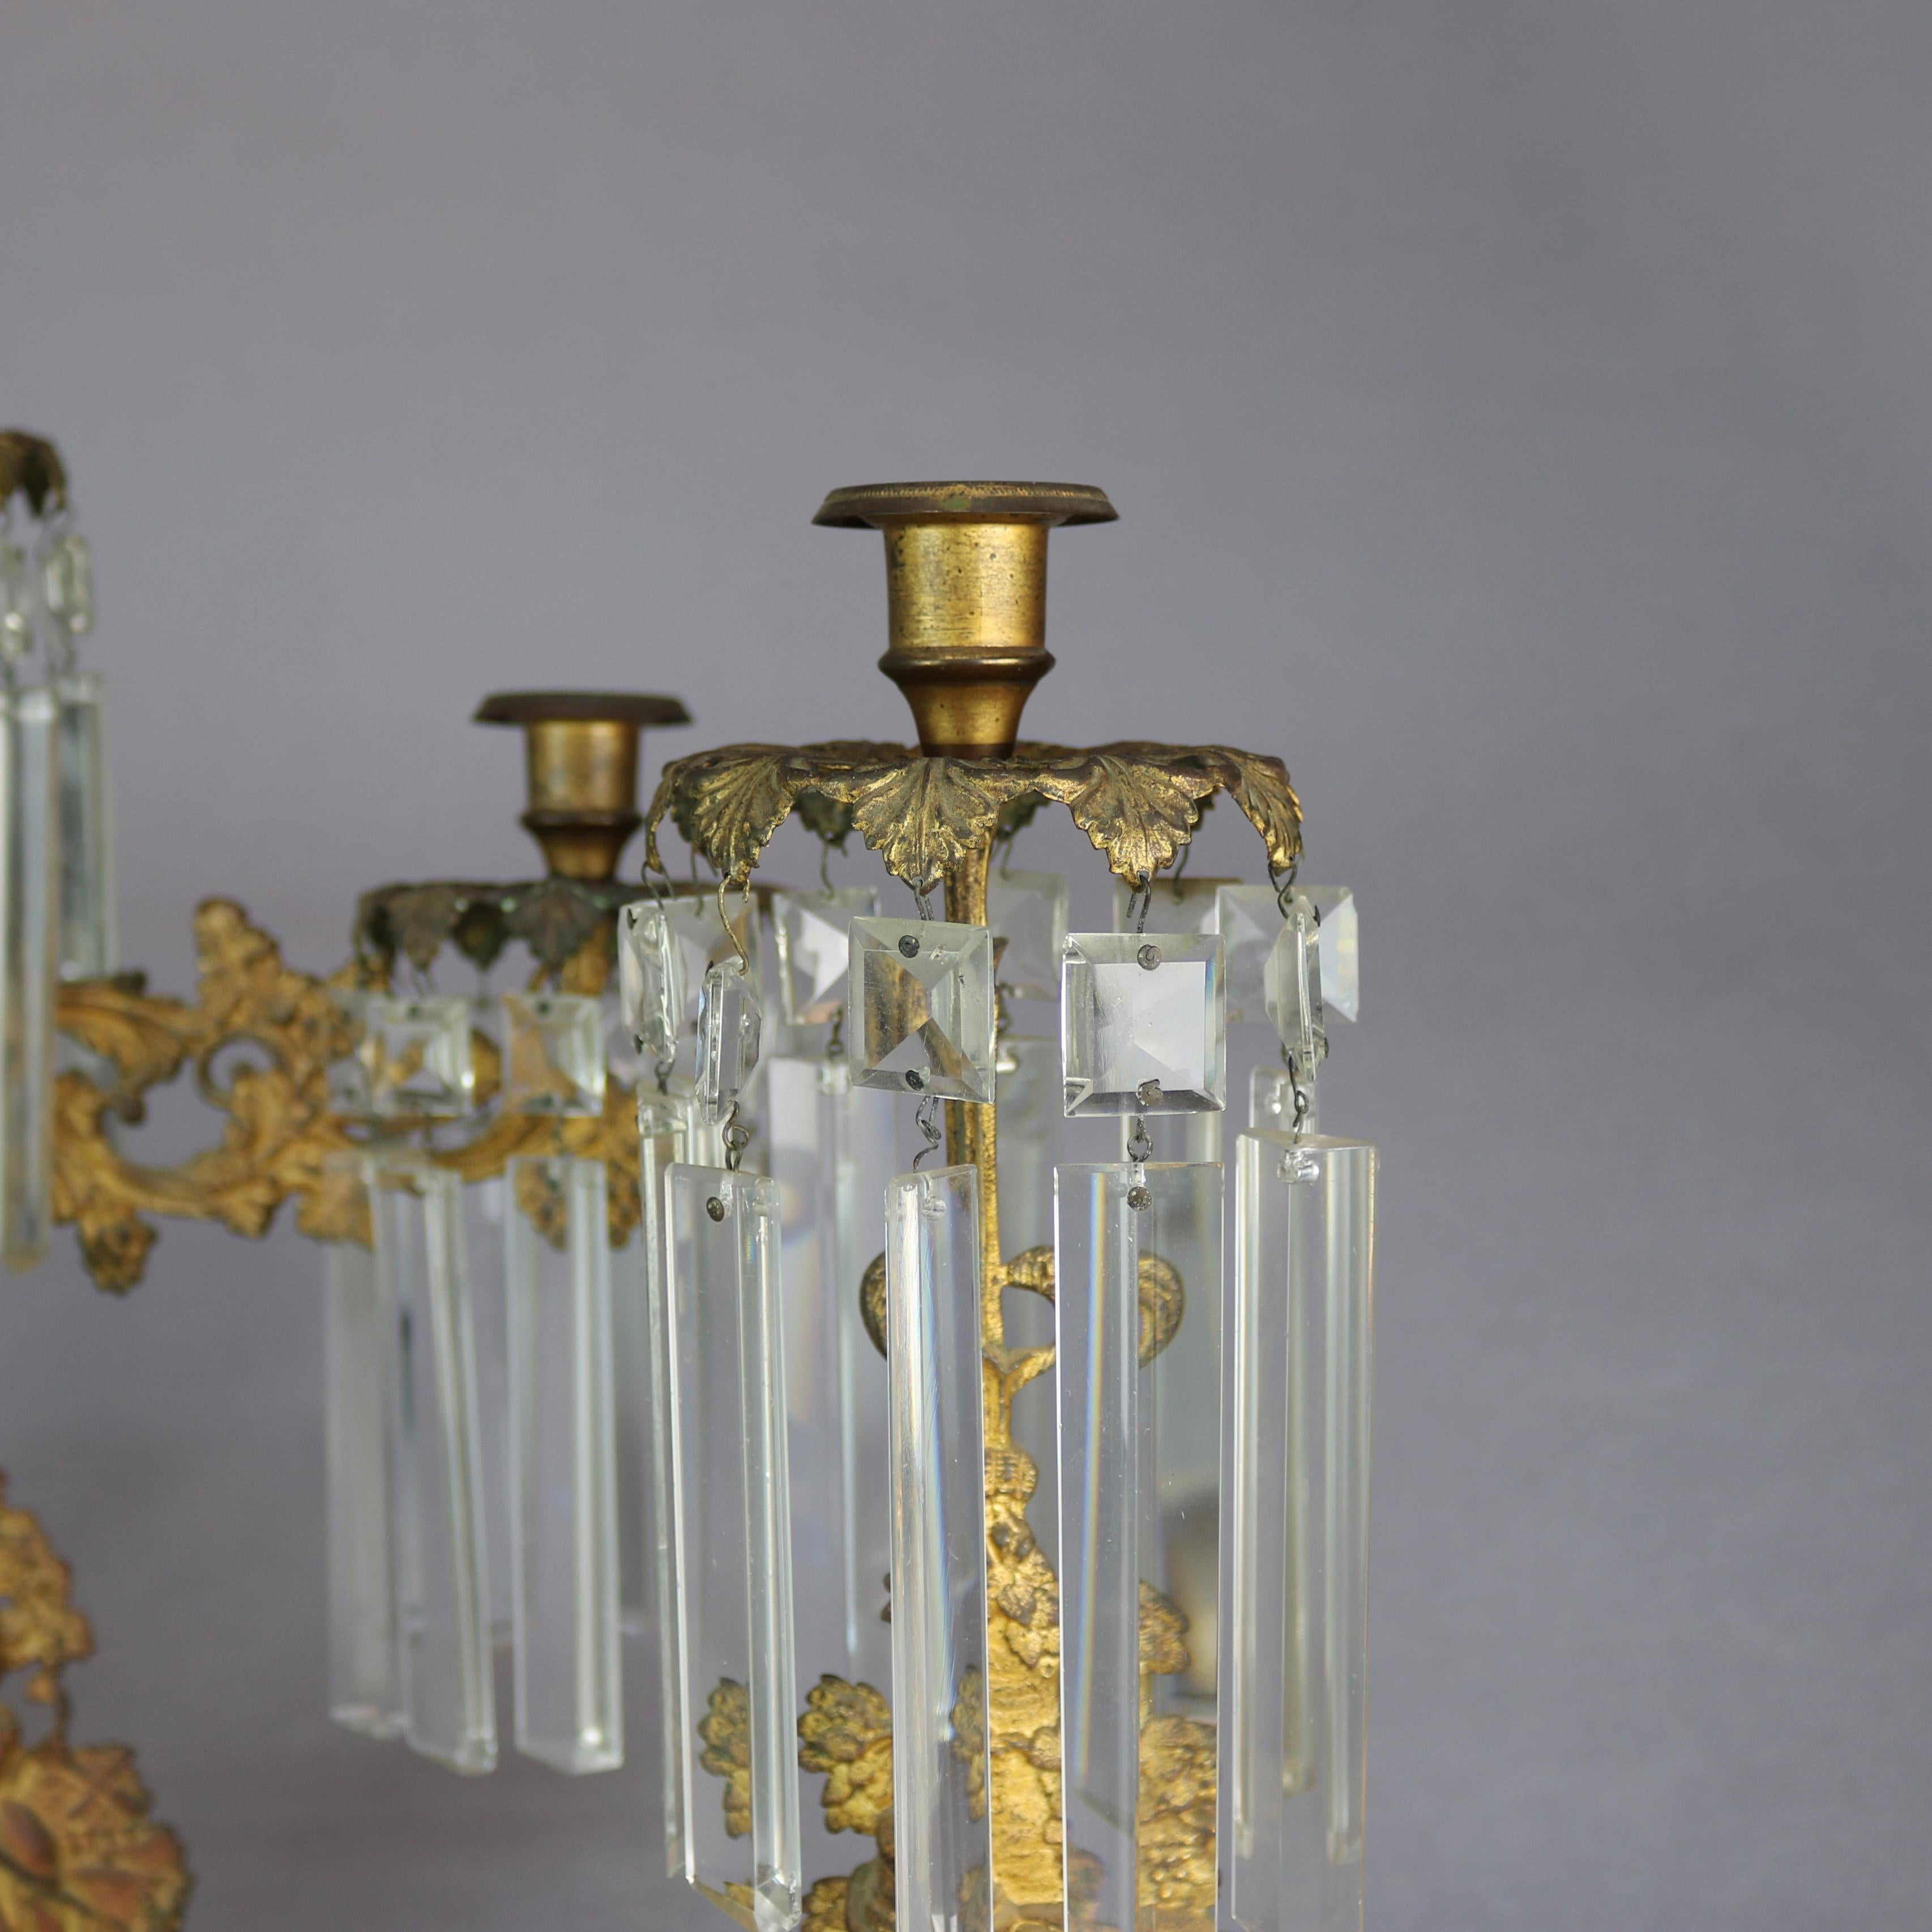 Antique American Figural Brass & Marble Mantel Girandolles Set, c1860 For Sale 1